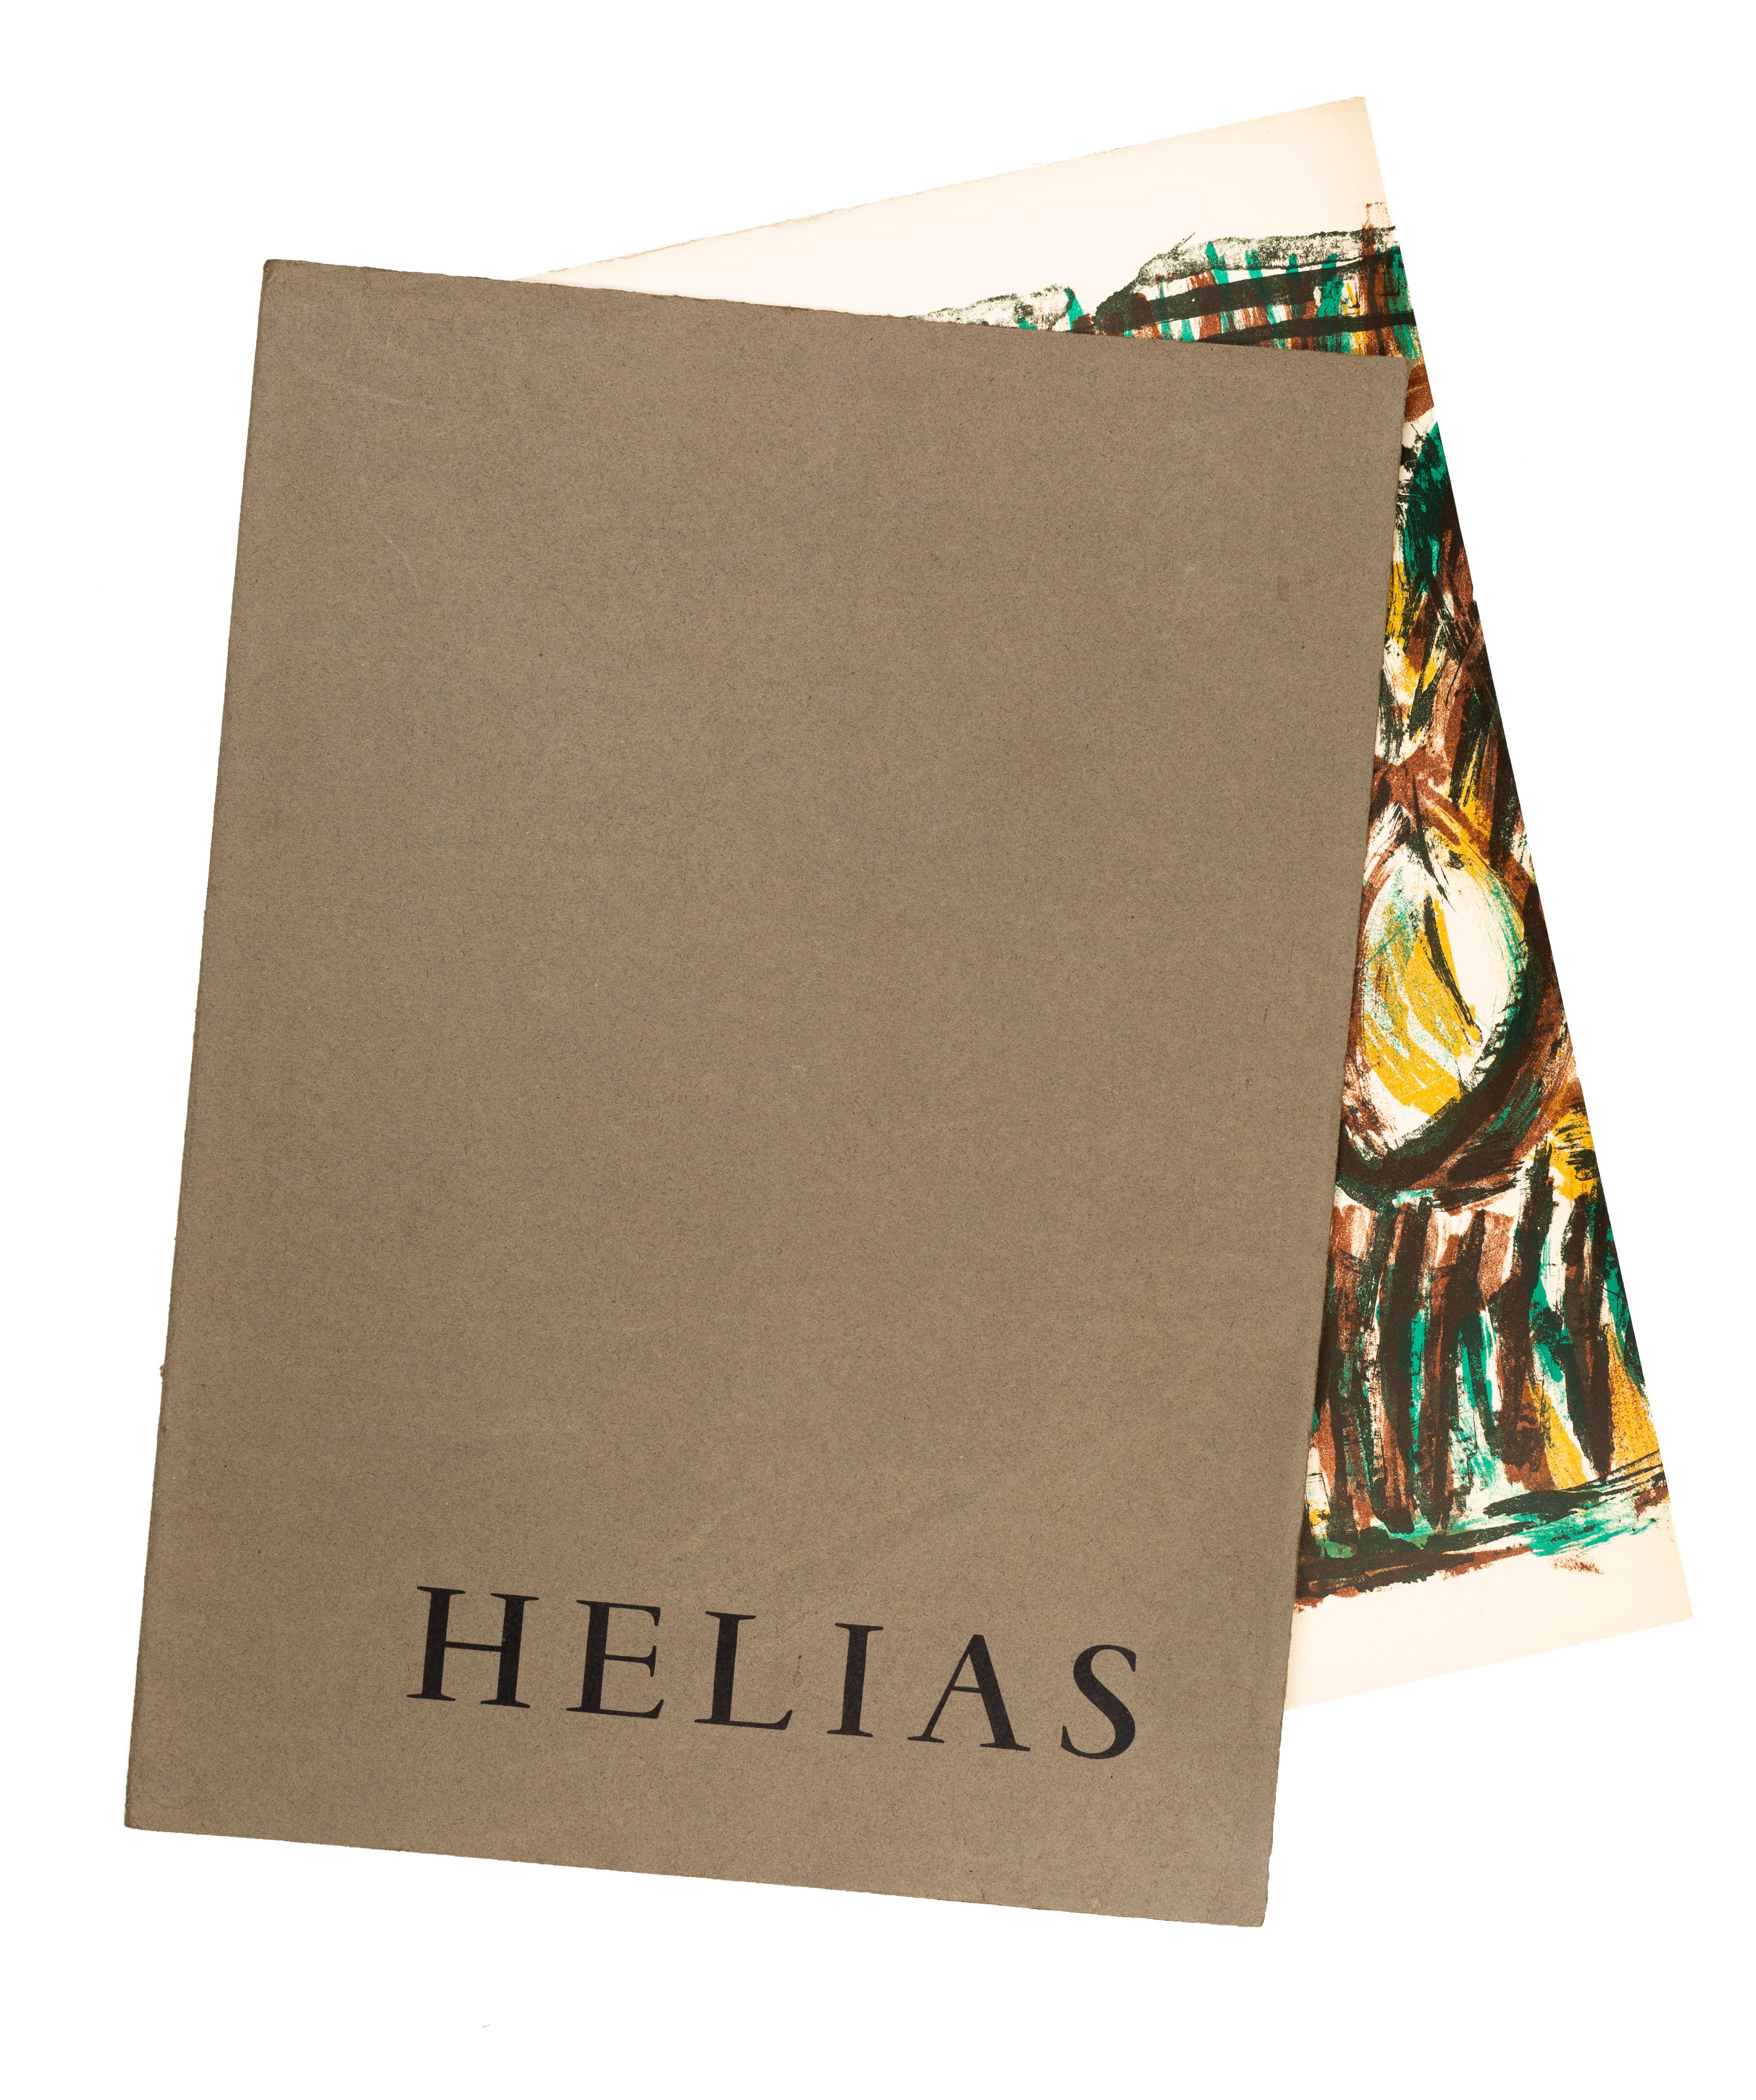 Helias - Lithograph by Serge Hélias - 1963 For Sale 2